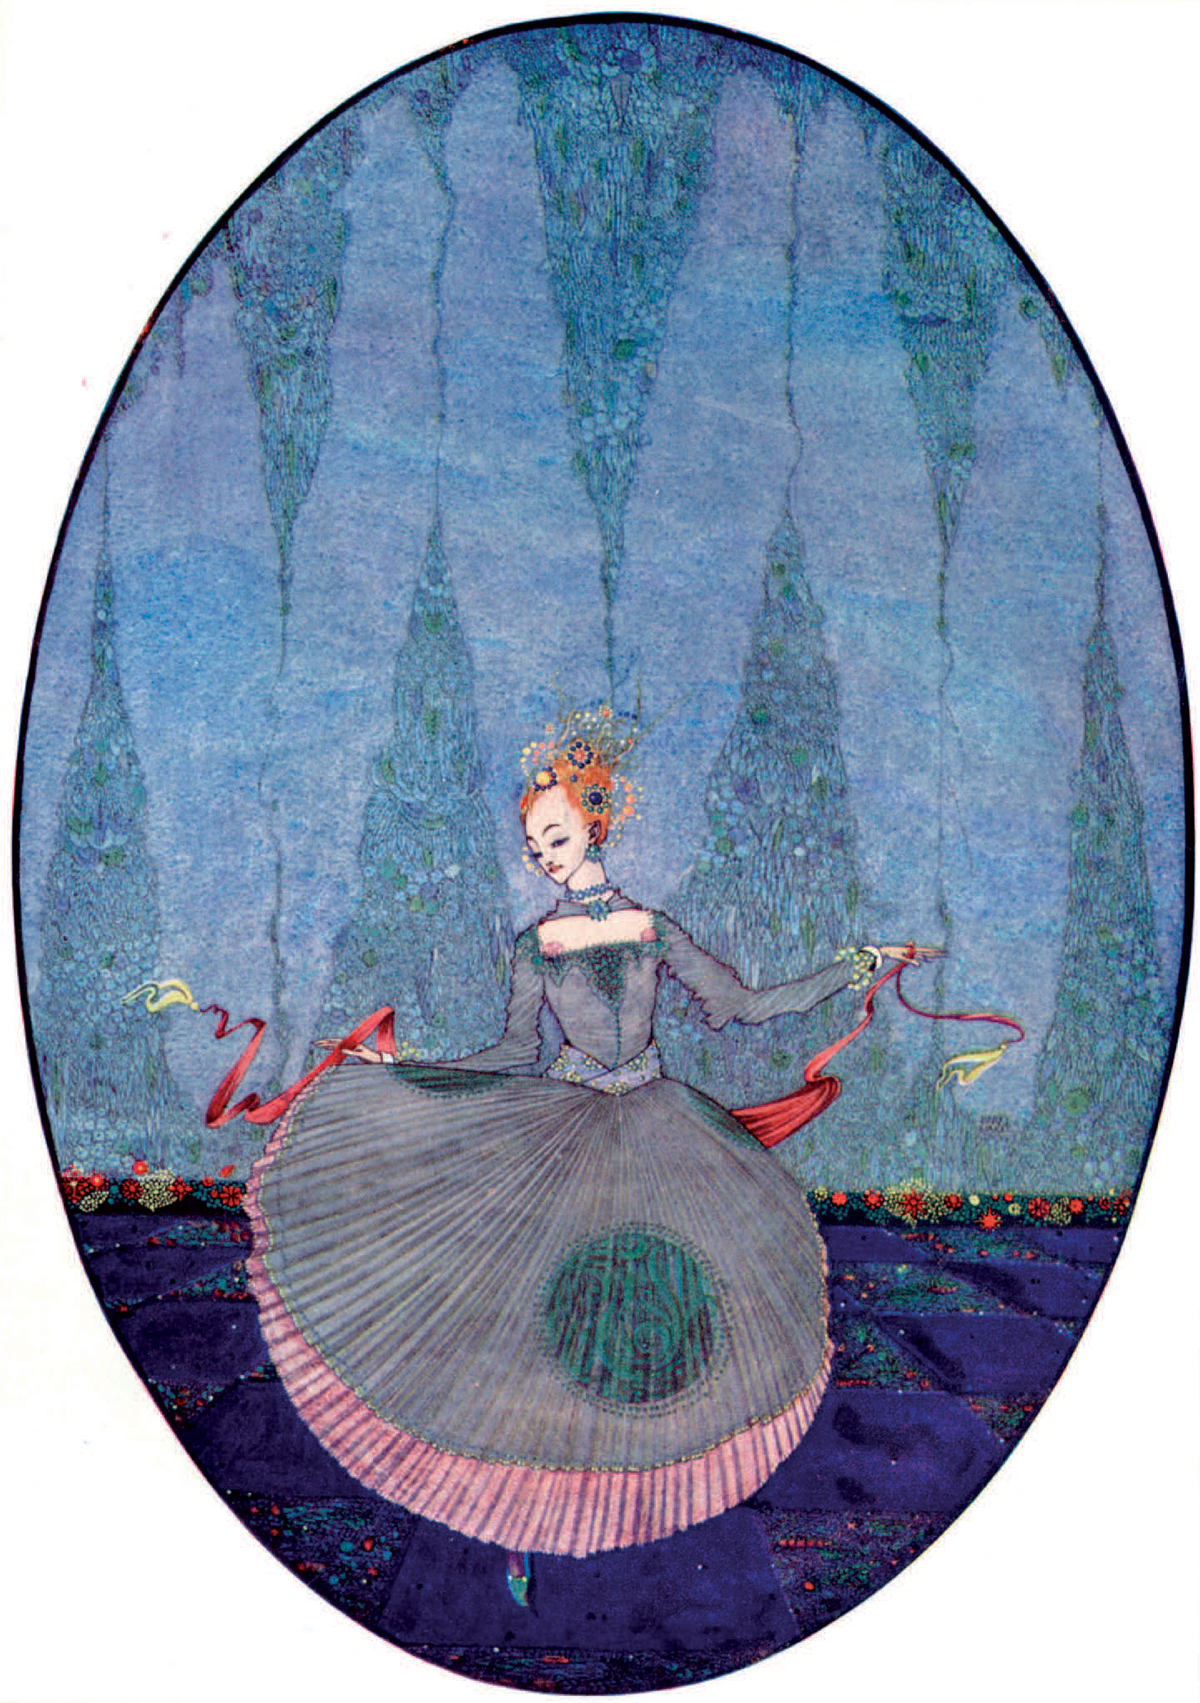 The Little Mermaid illustration by Harry Clarke